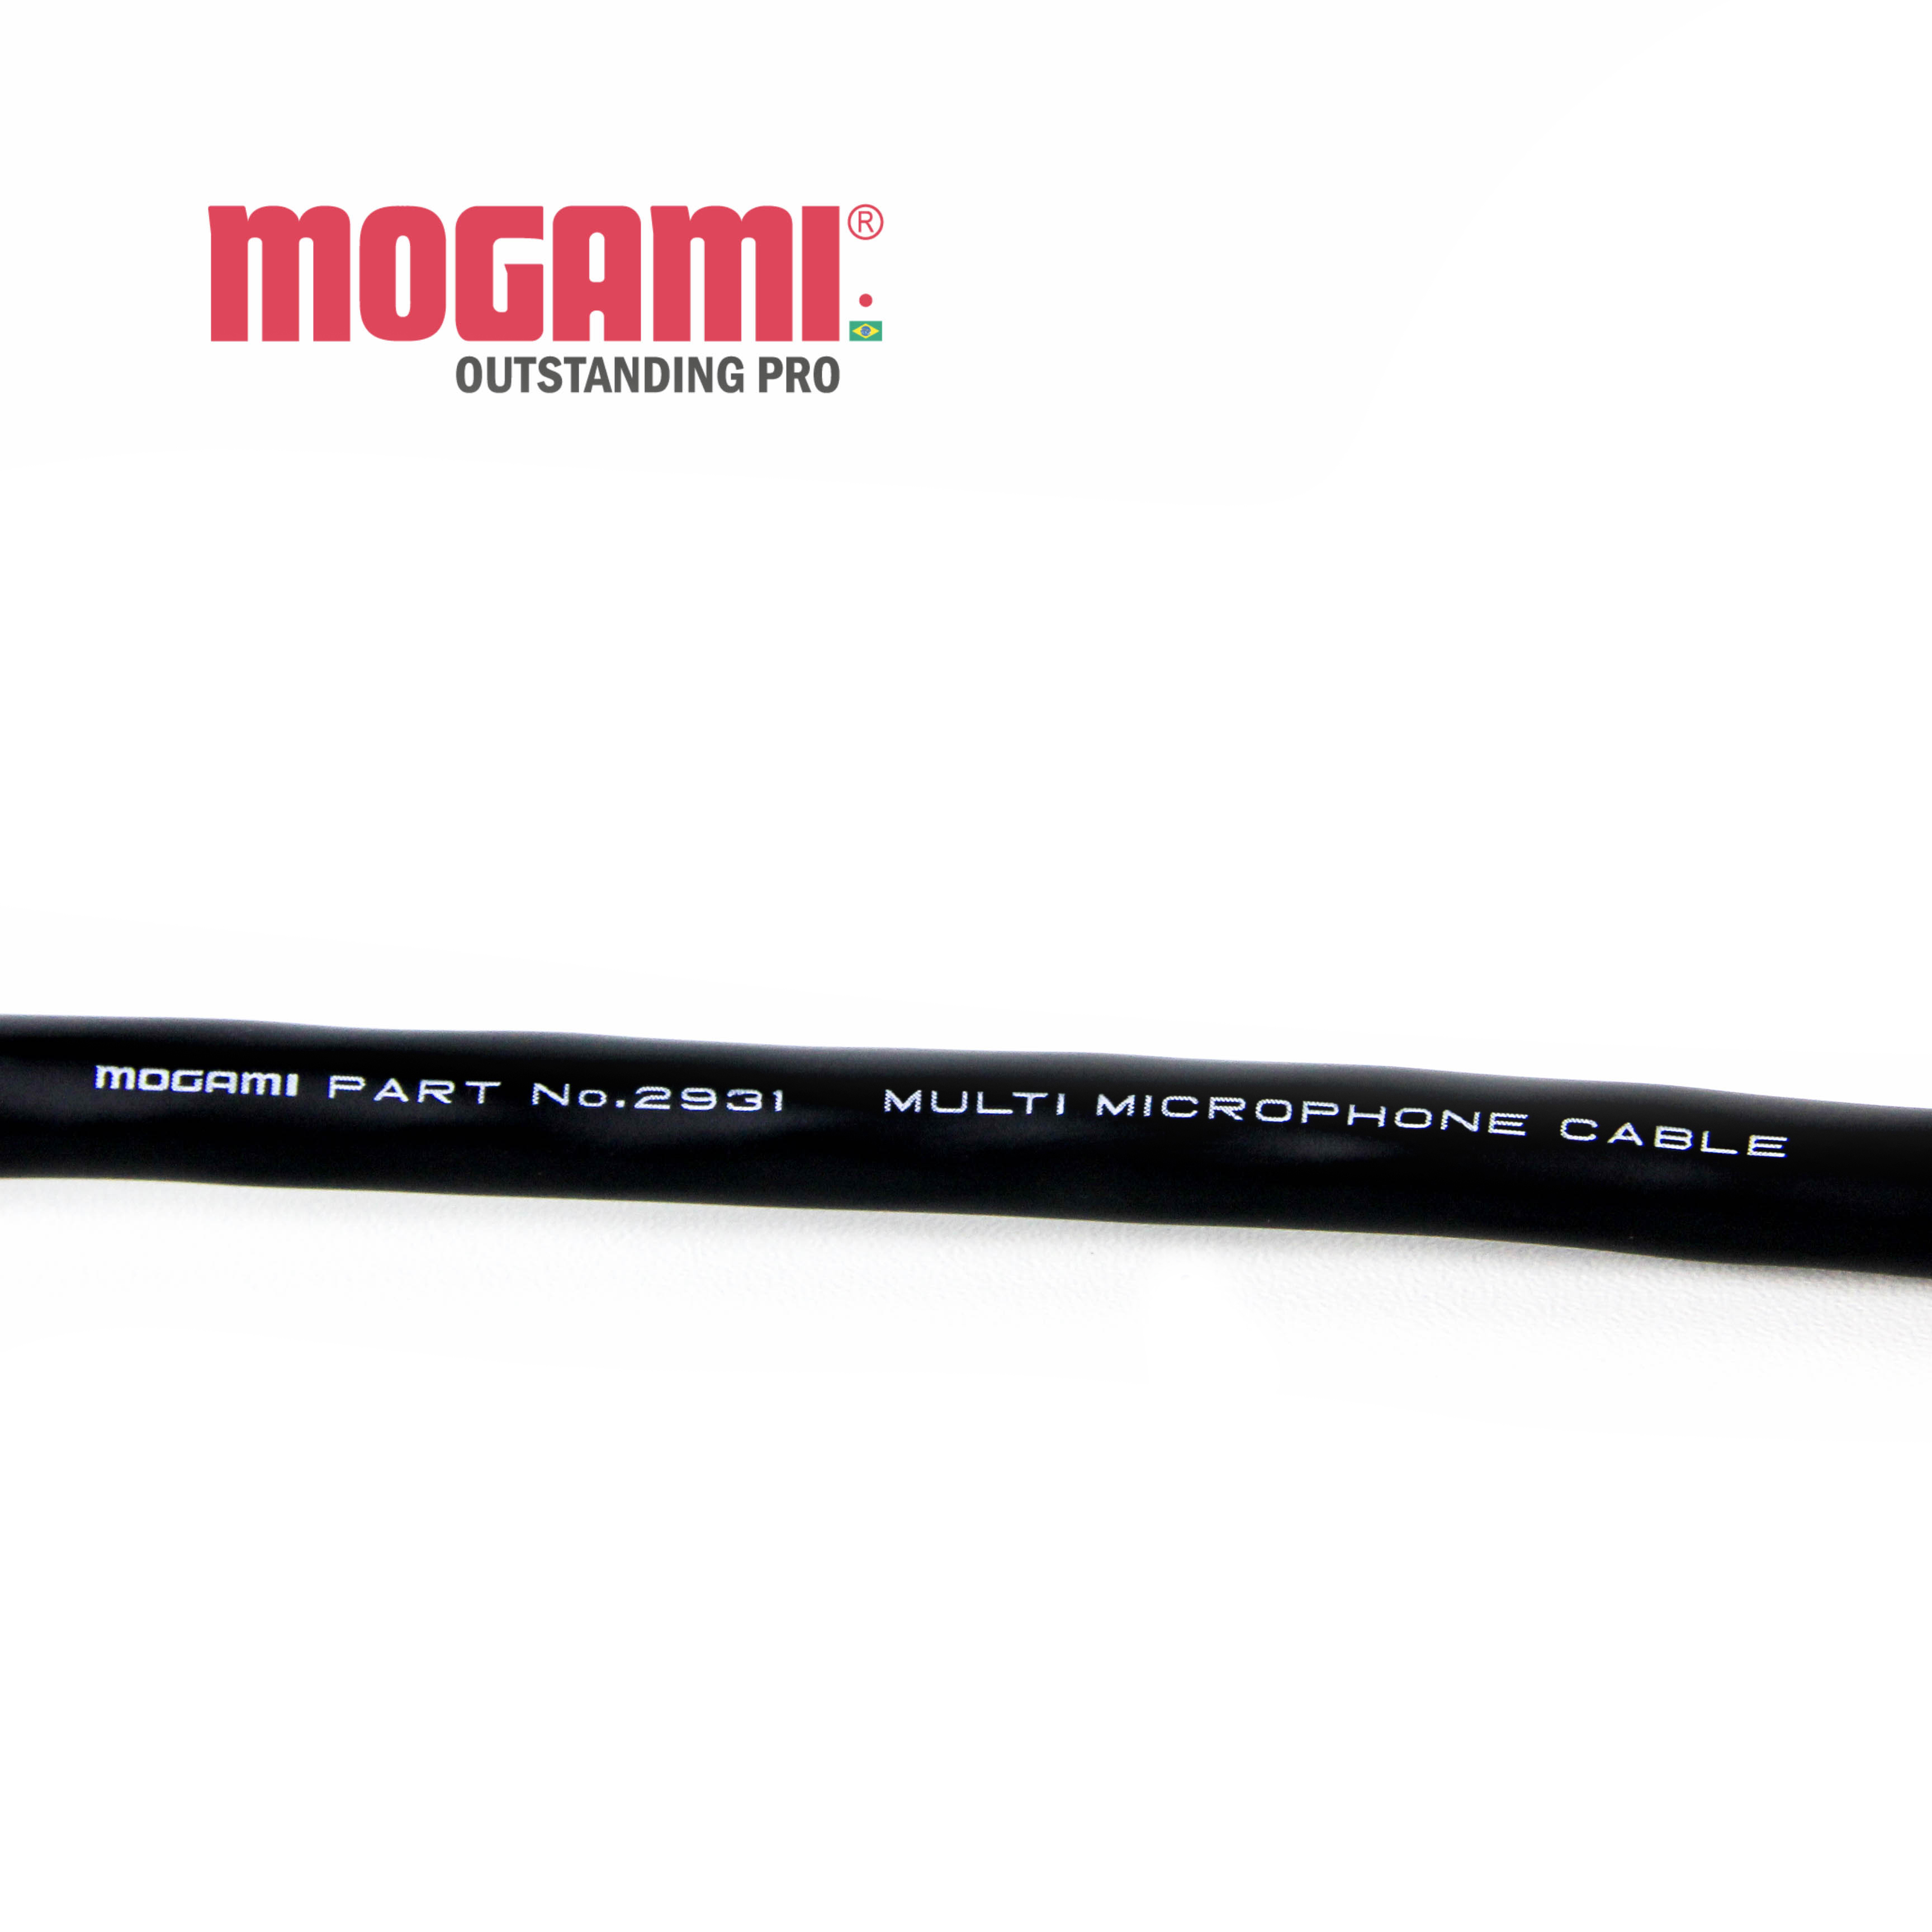 cabo-mogami-2931